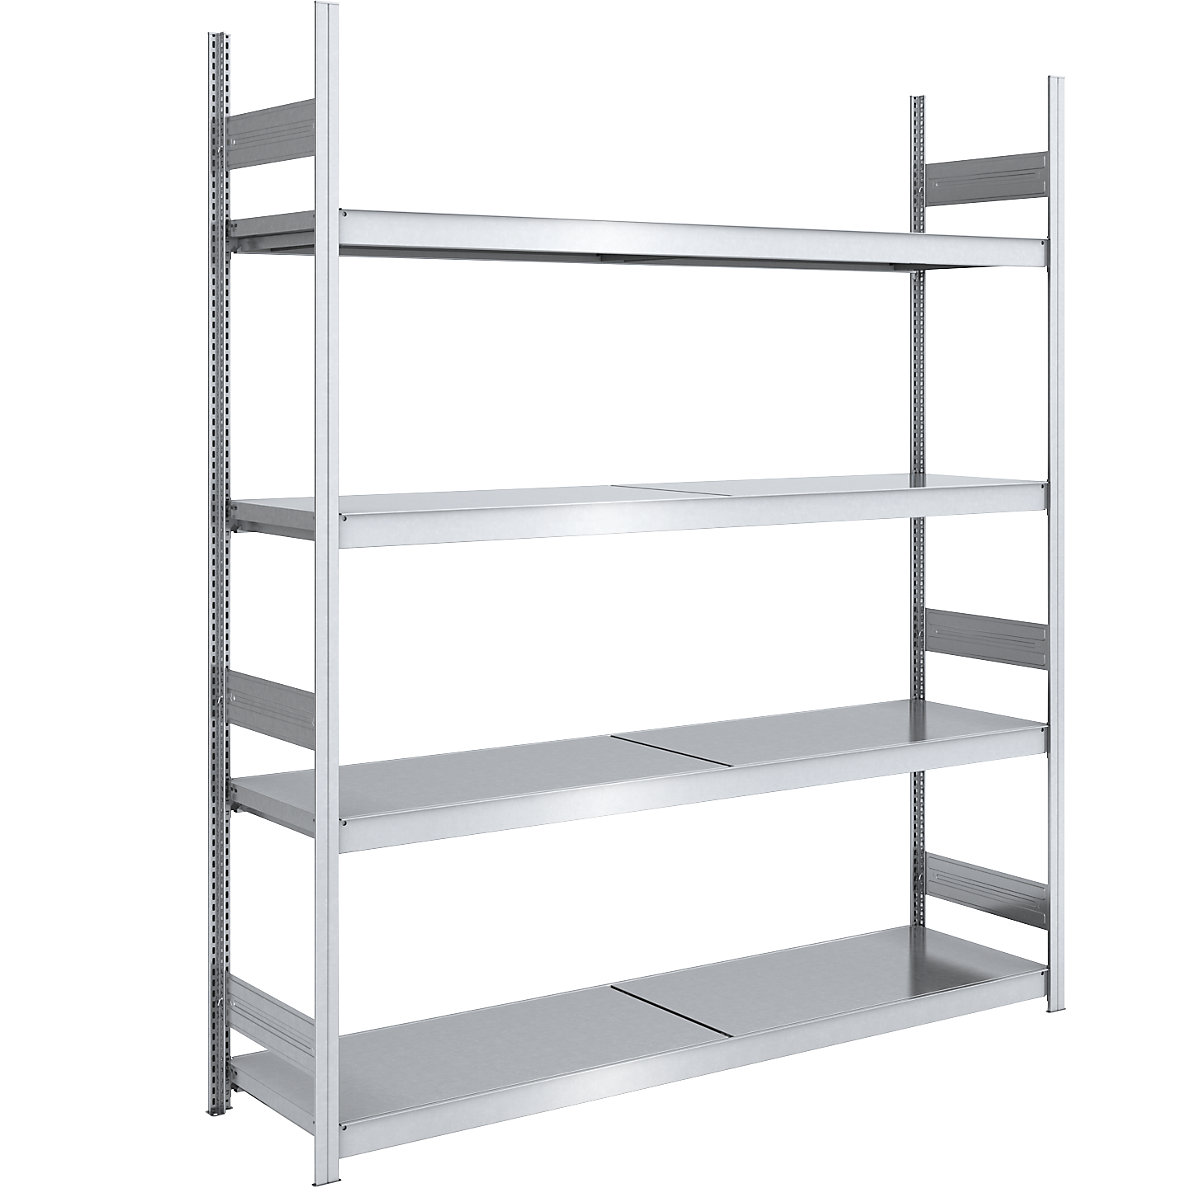 Wide span boltless shelving unit with steel shelves – hofe, height 2500 mm, shelf width 2000 mm, shelf depth 600 mm, standard shelf unit